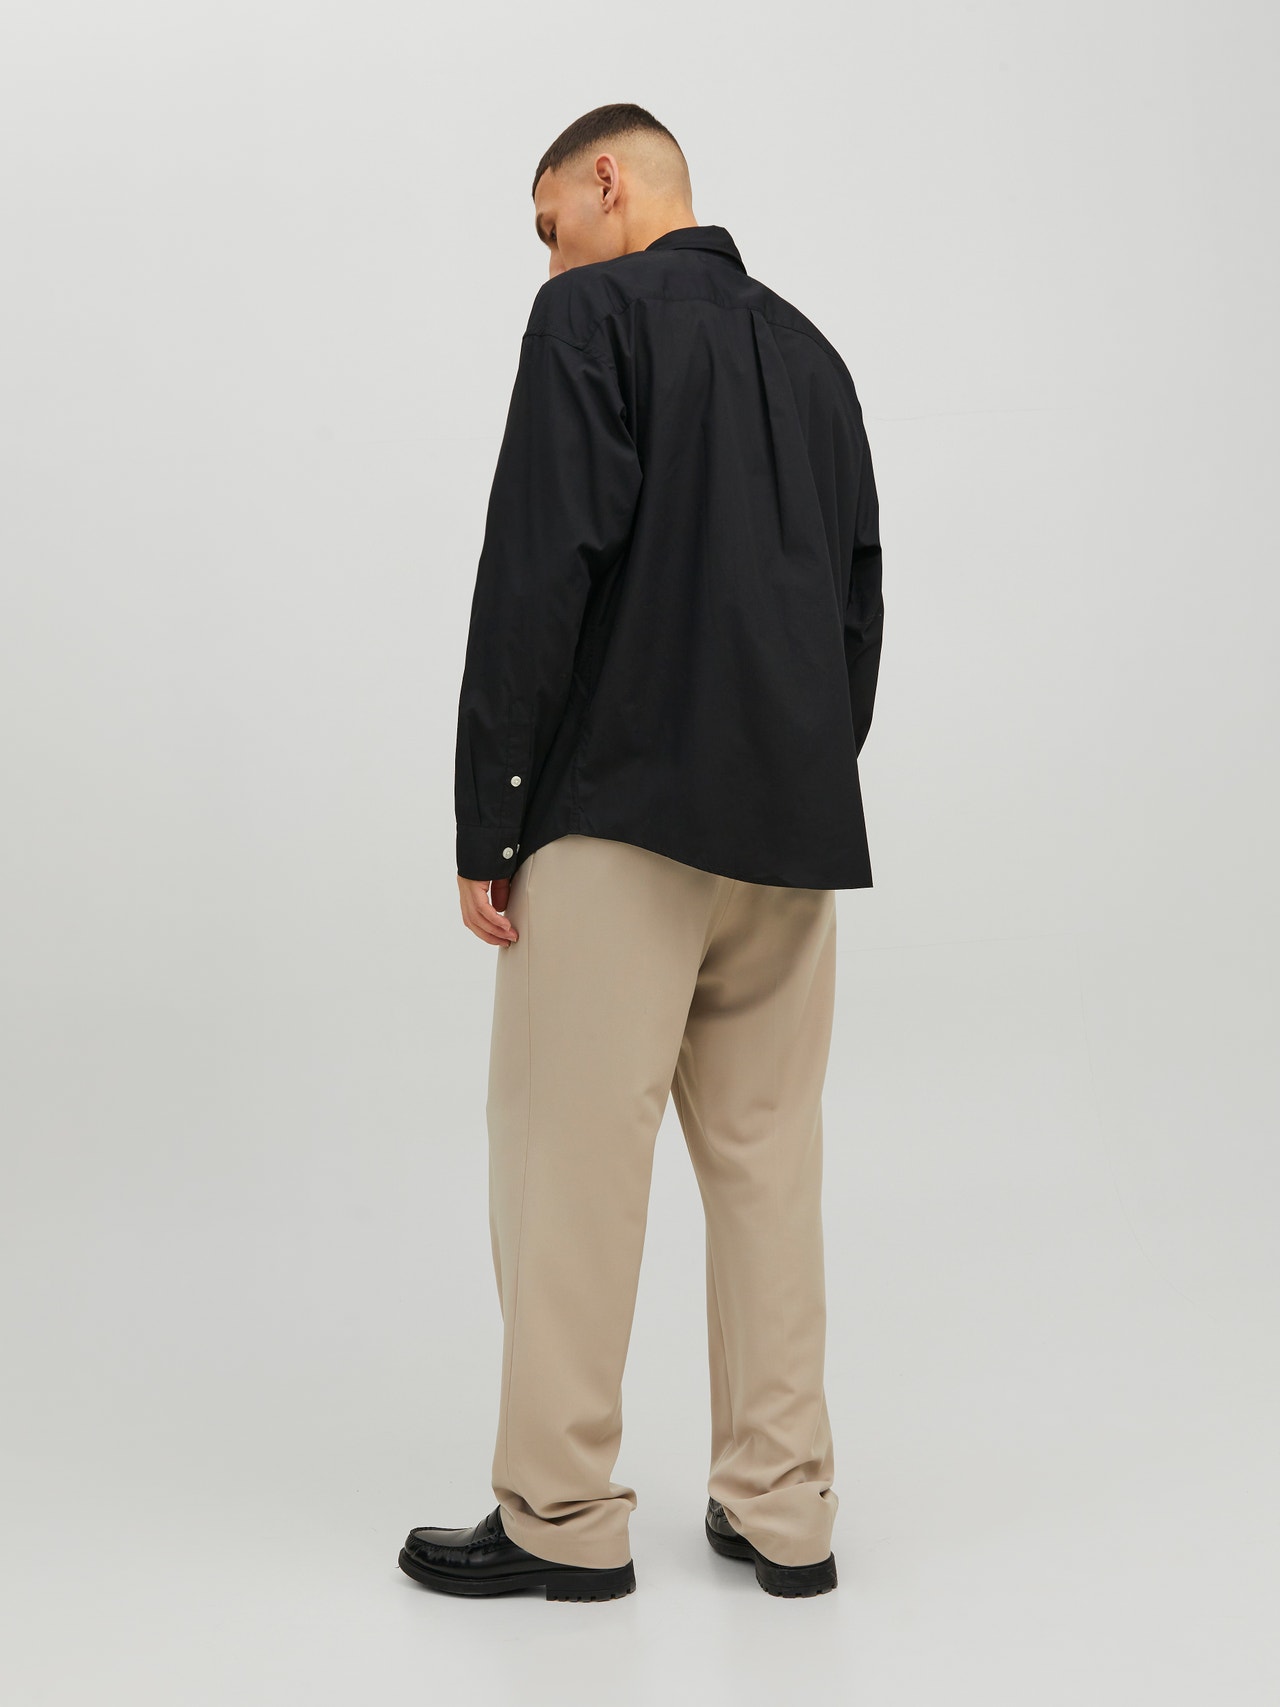 Jack & Jones Camisa Casual Oversize Fit -Black - 12233117